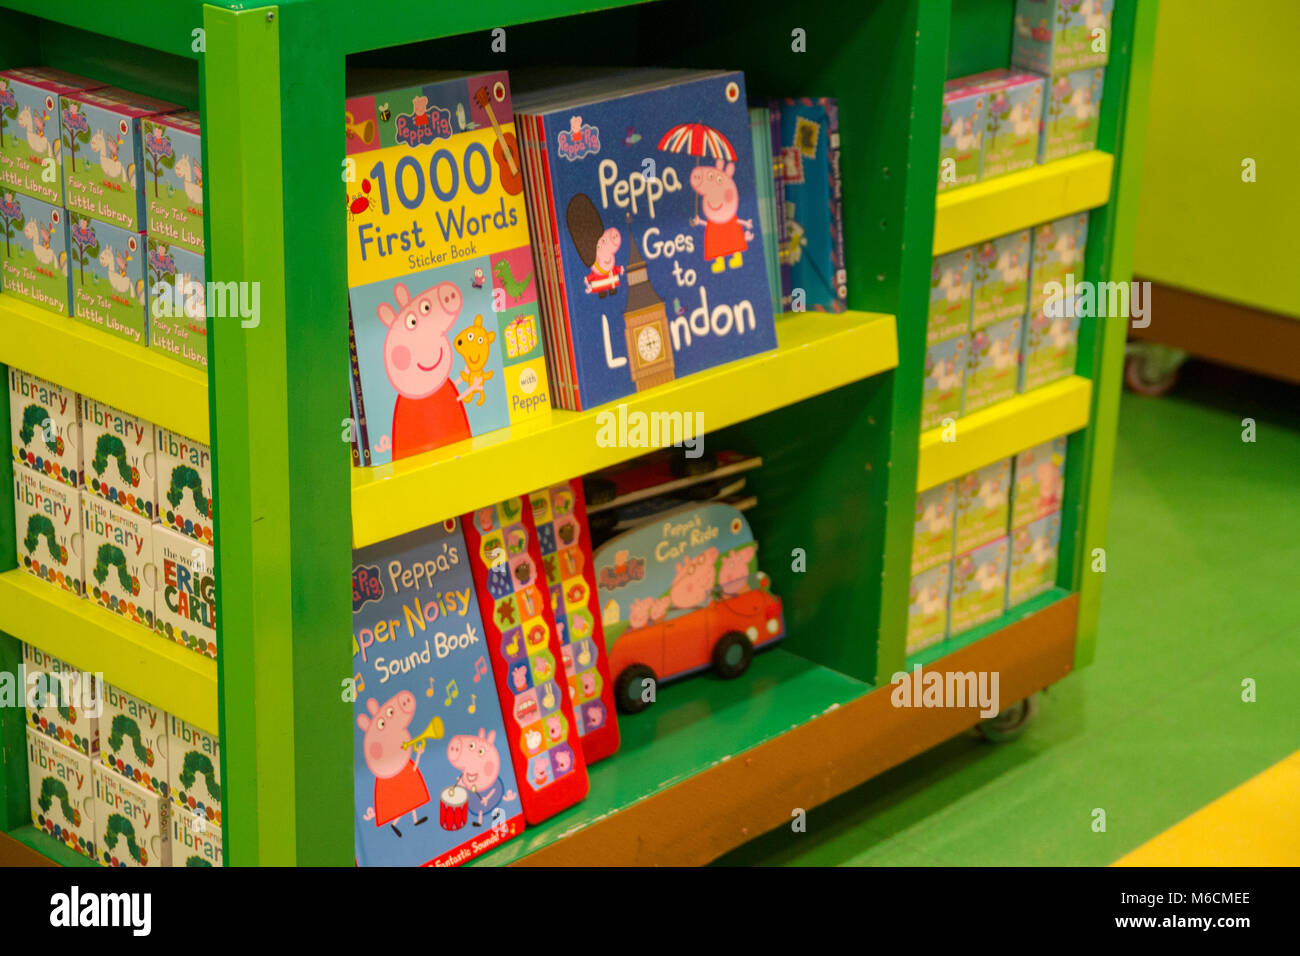 Childrens books, kids books, kid,child Peppa Pig books on Display in a  bookshop, London UK, education concept Stock Photo - Alamy